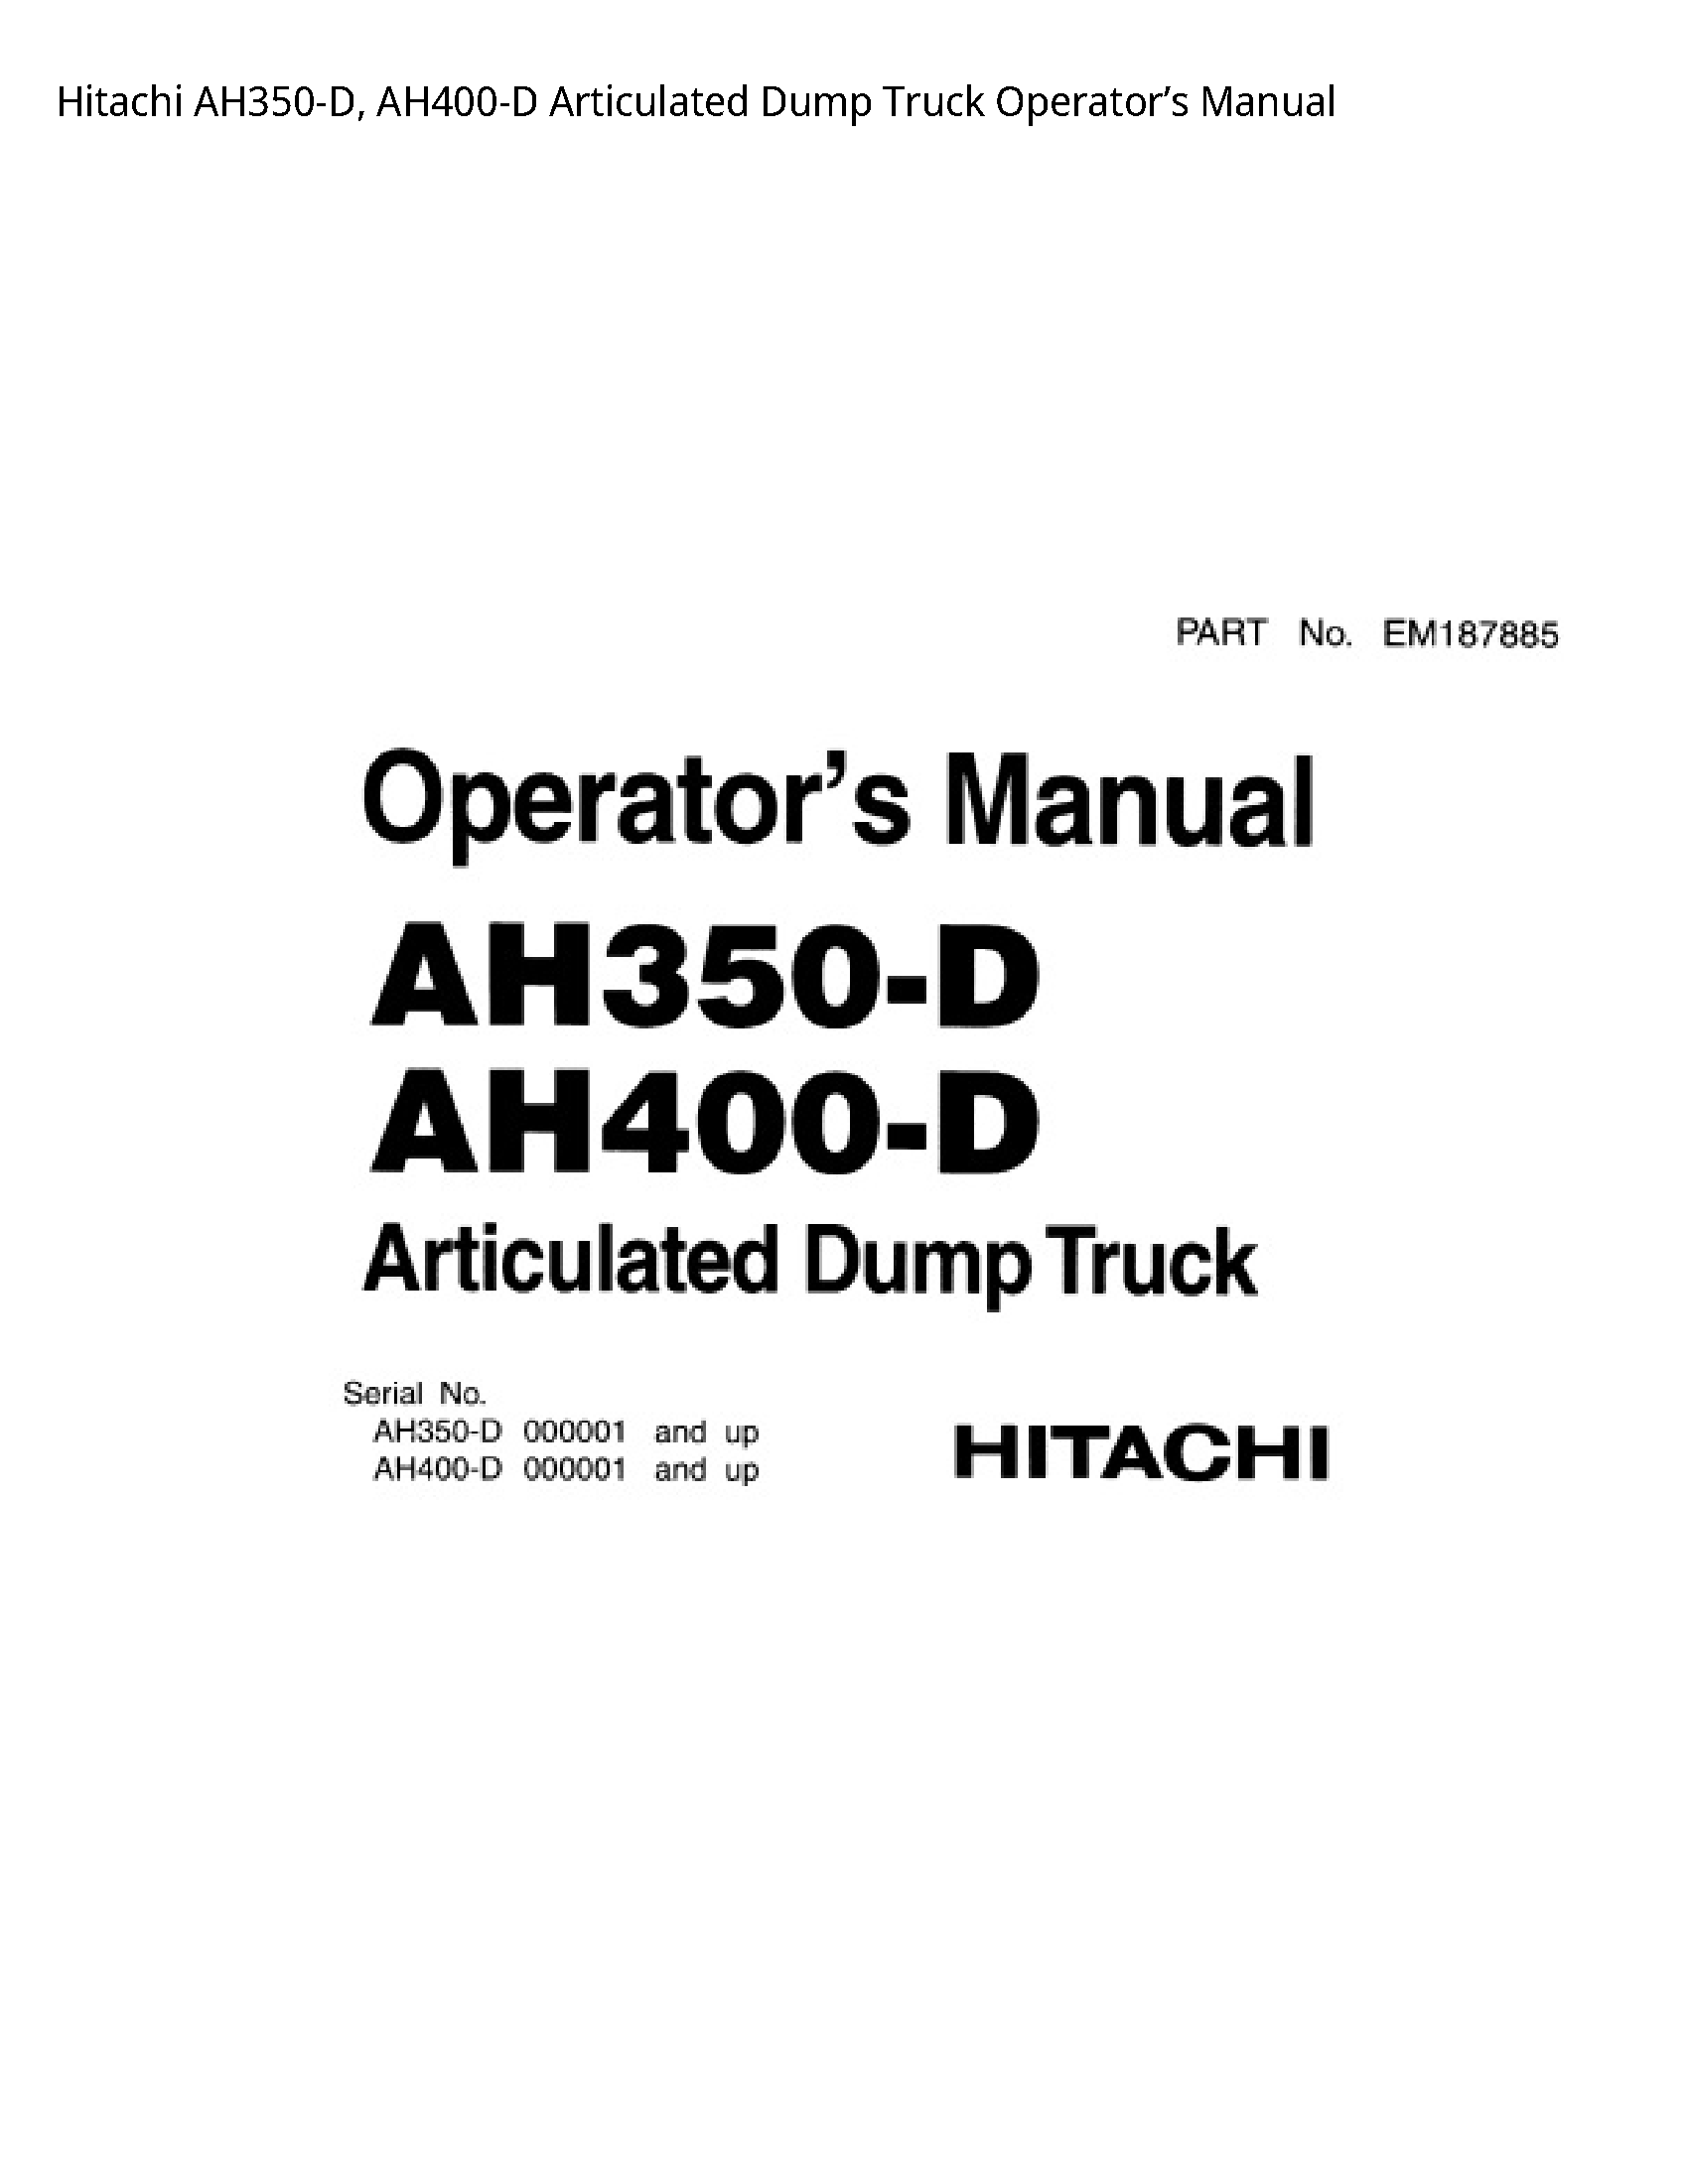 Hitachi AH350-D Articulated Dump Truck Operator’s manual